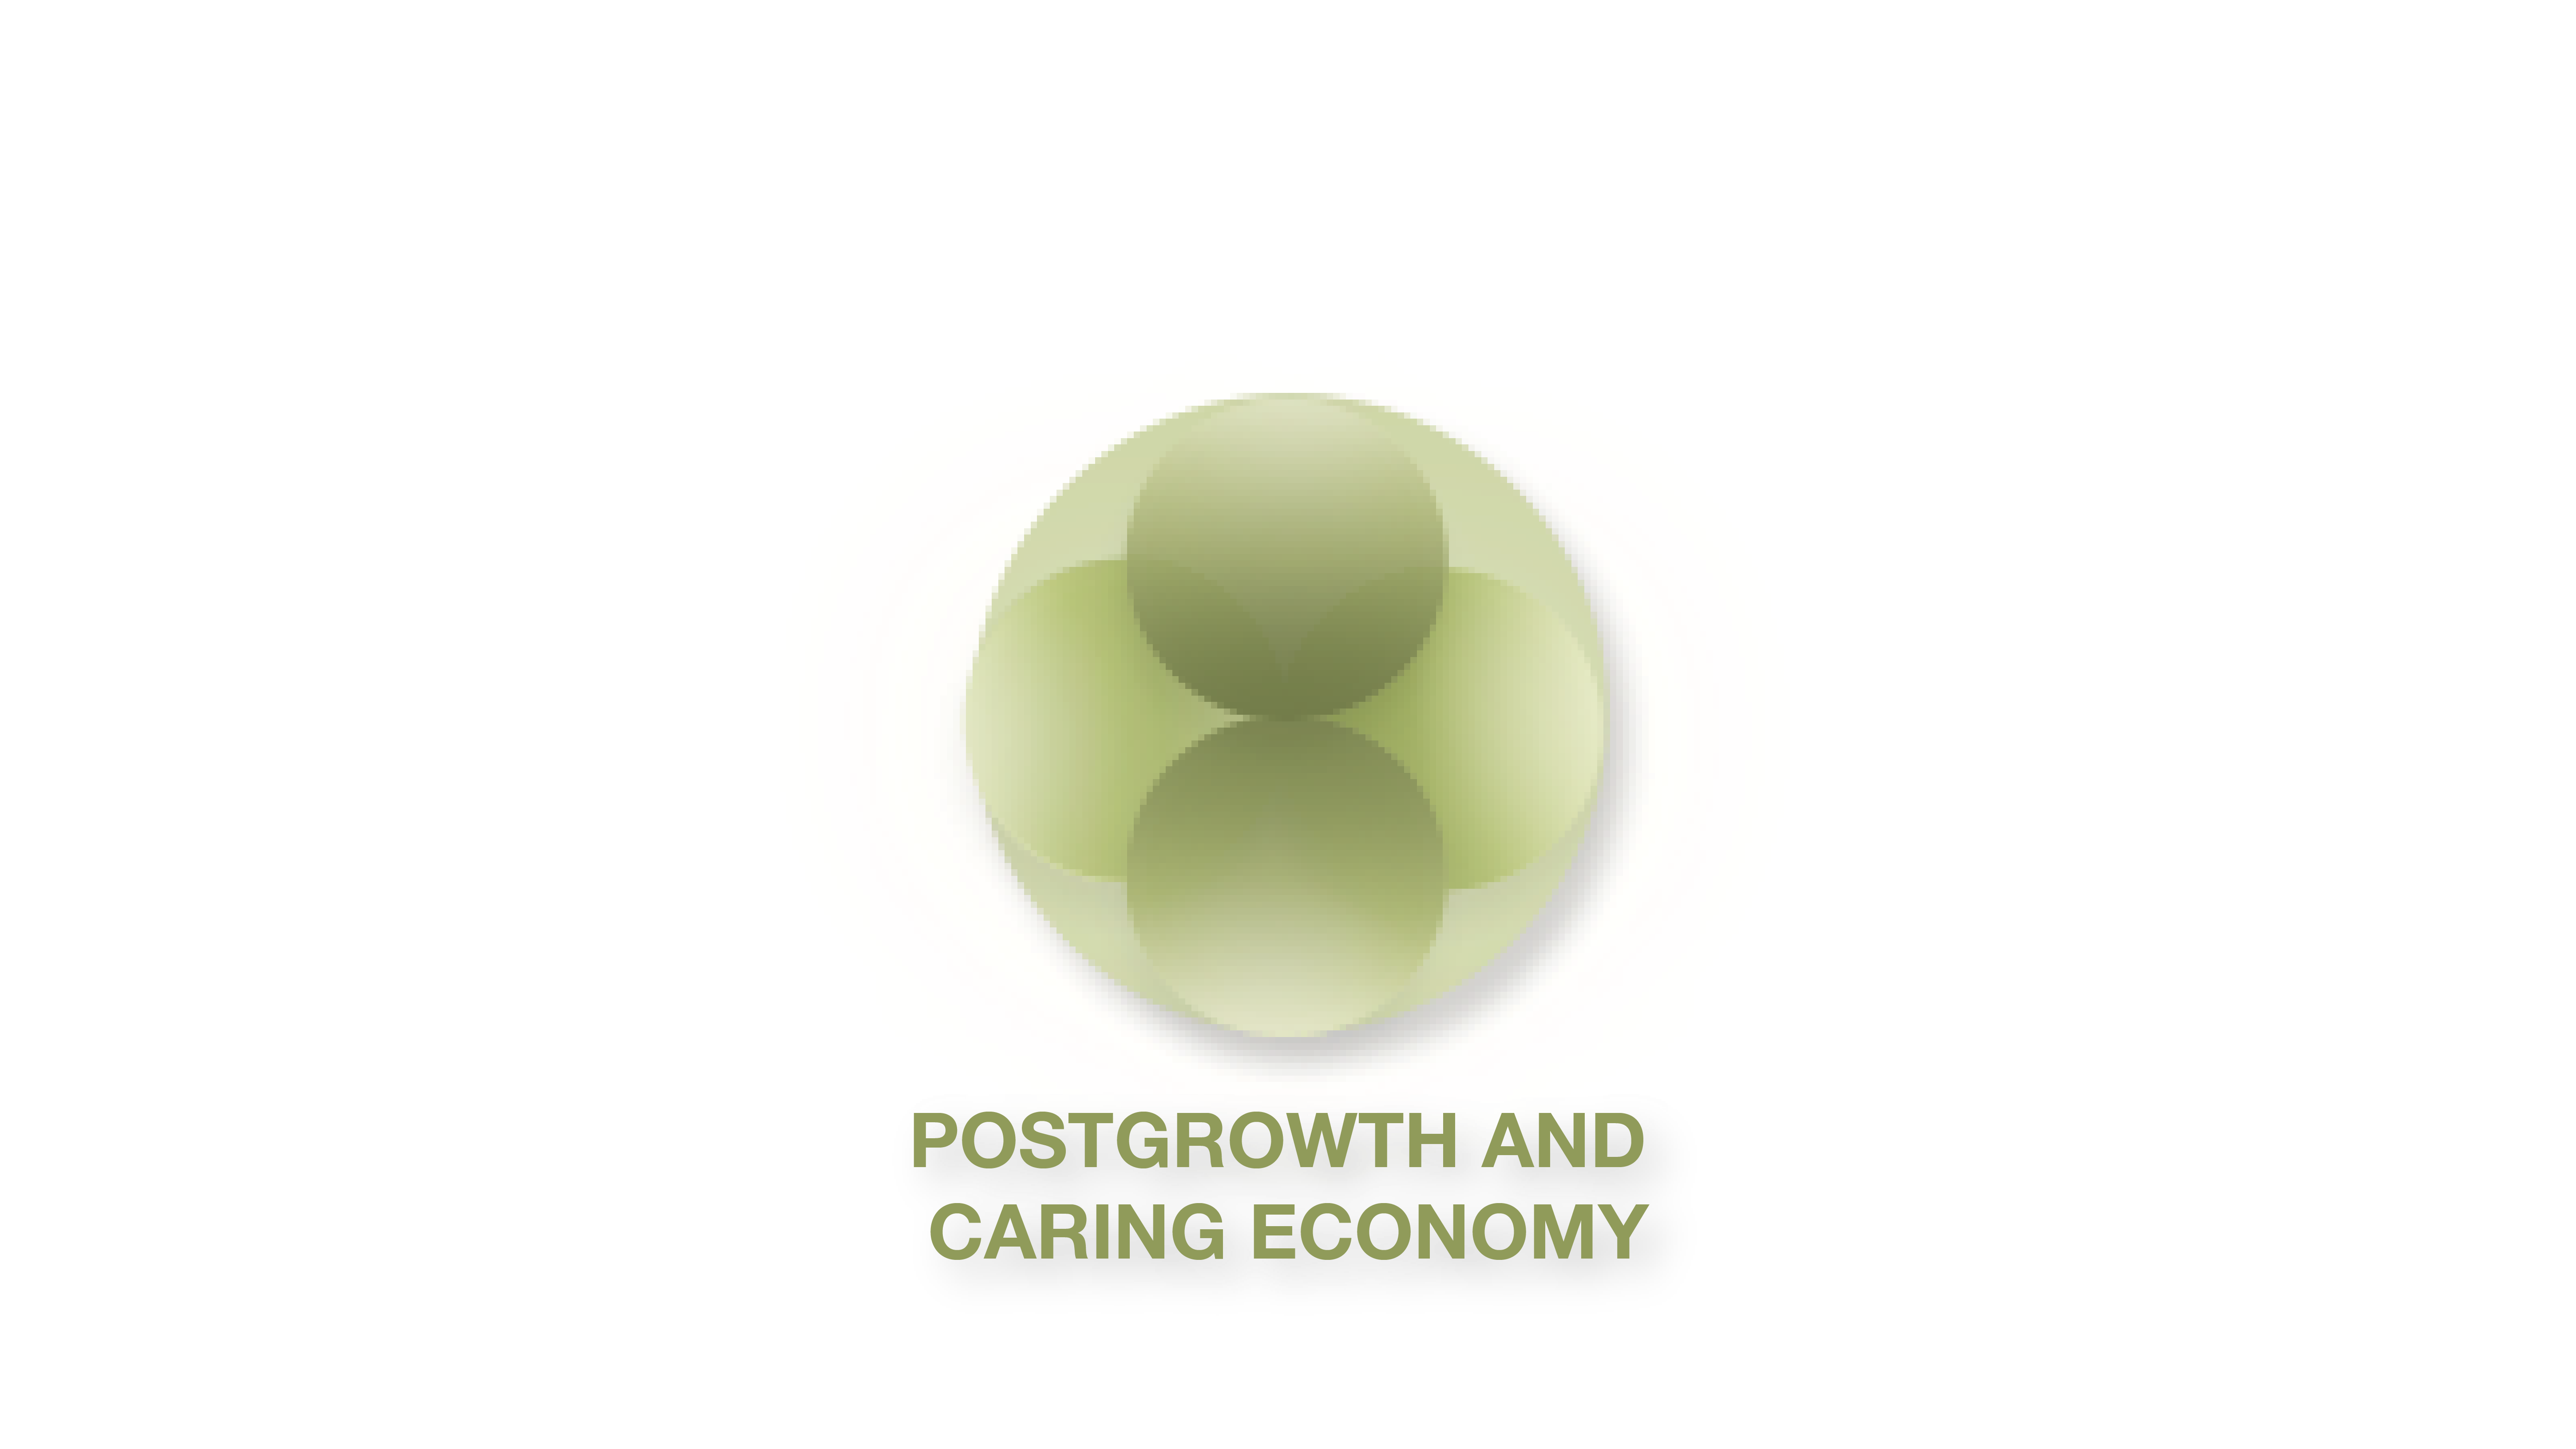 Postgrowth & caring economy